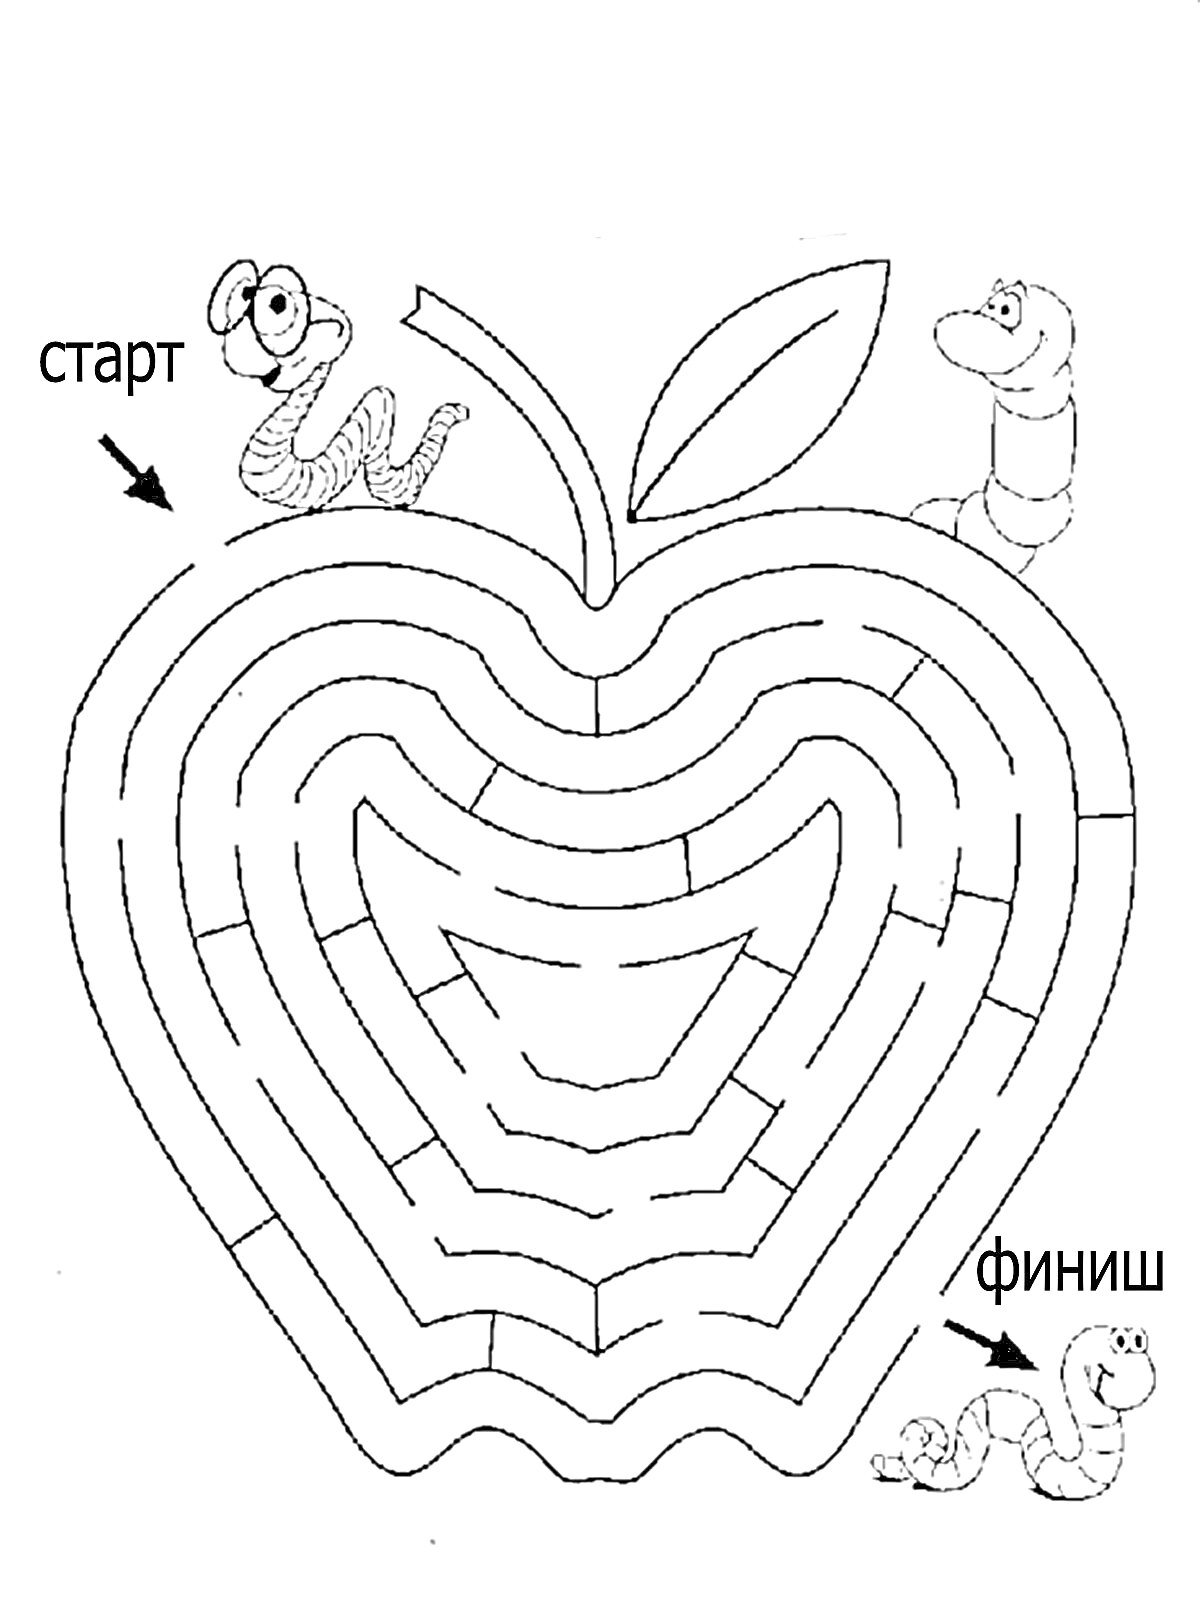 Лабиринт в форме яблока с двумя червяками, старт и финиш